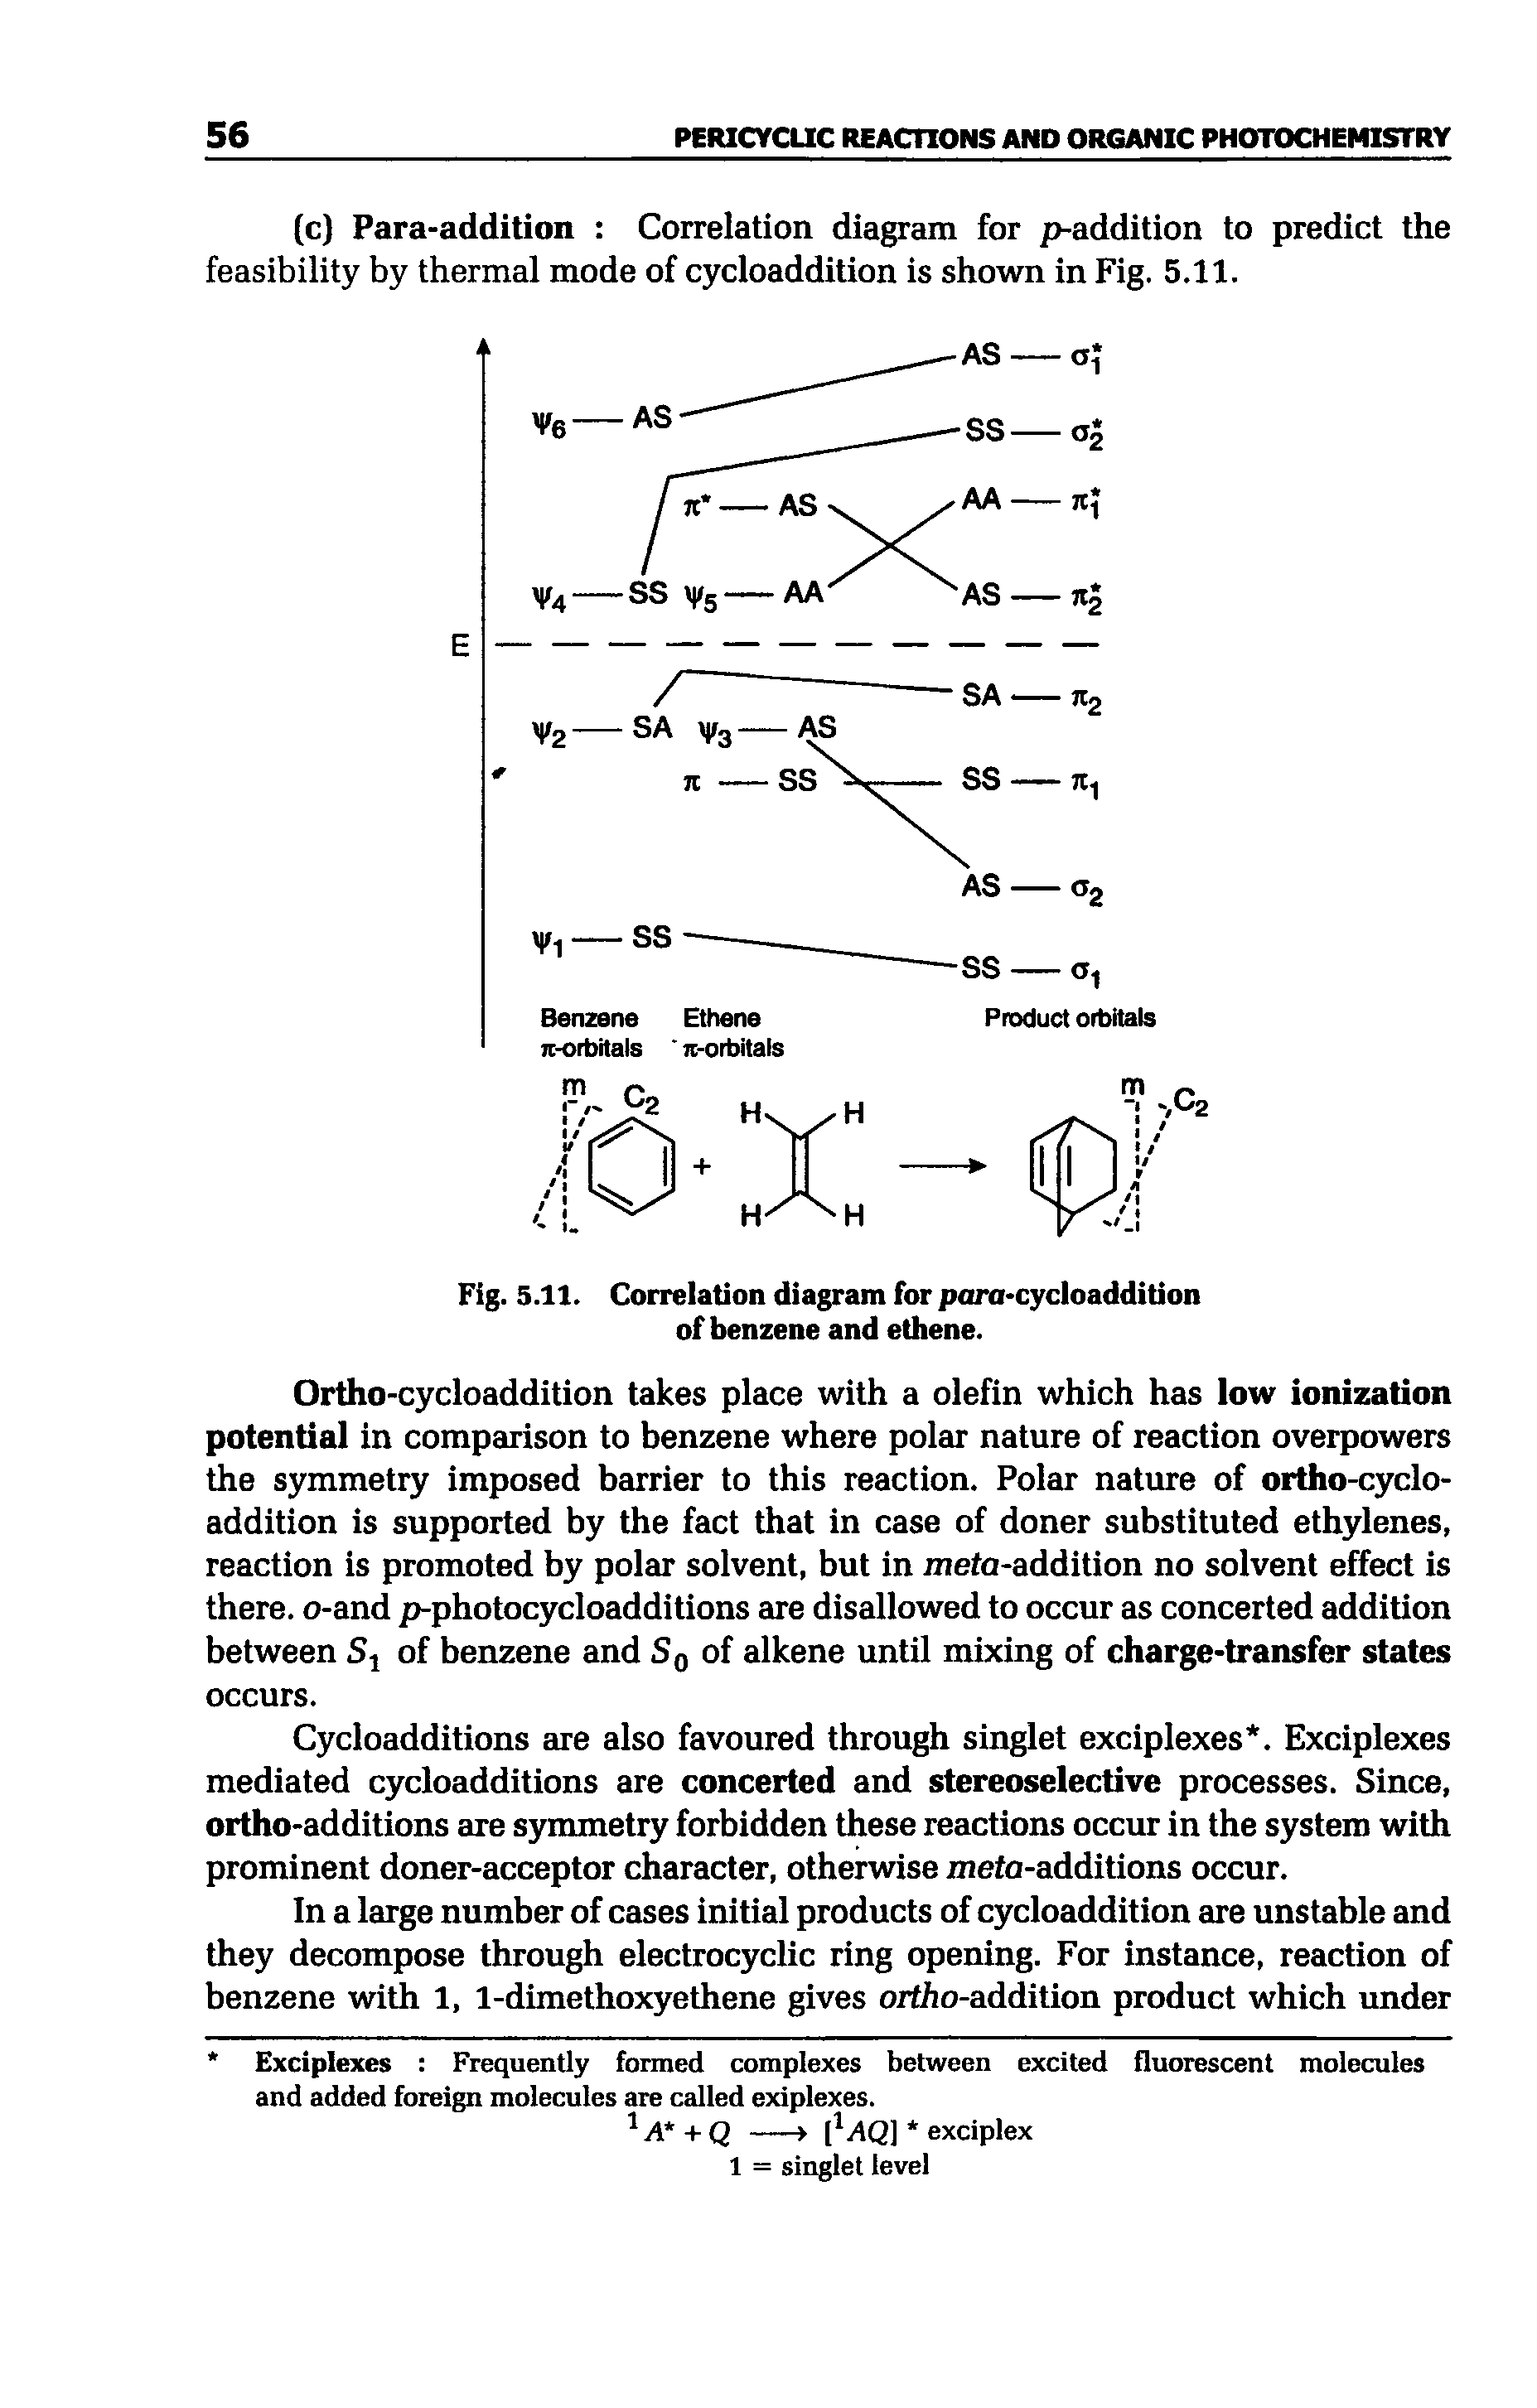 Fig. 5.11. Correlation diagram for pora-cycloaddition of benzene and ethene.